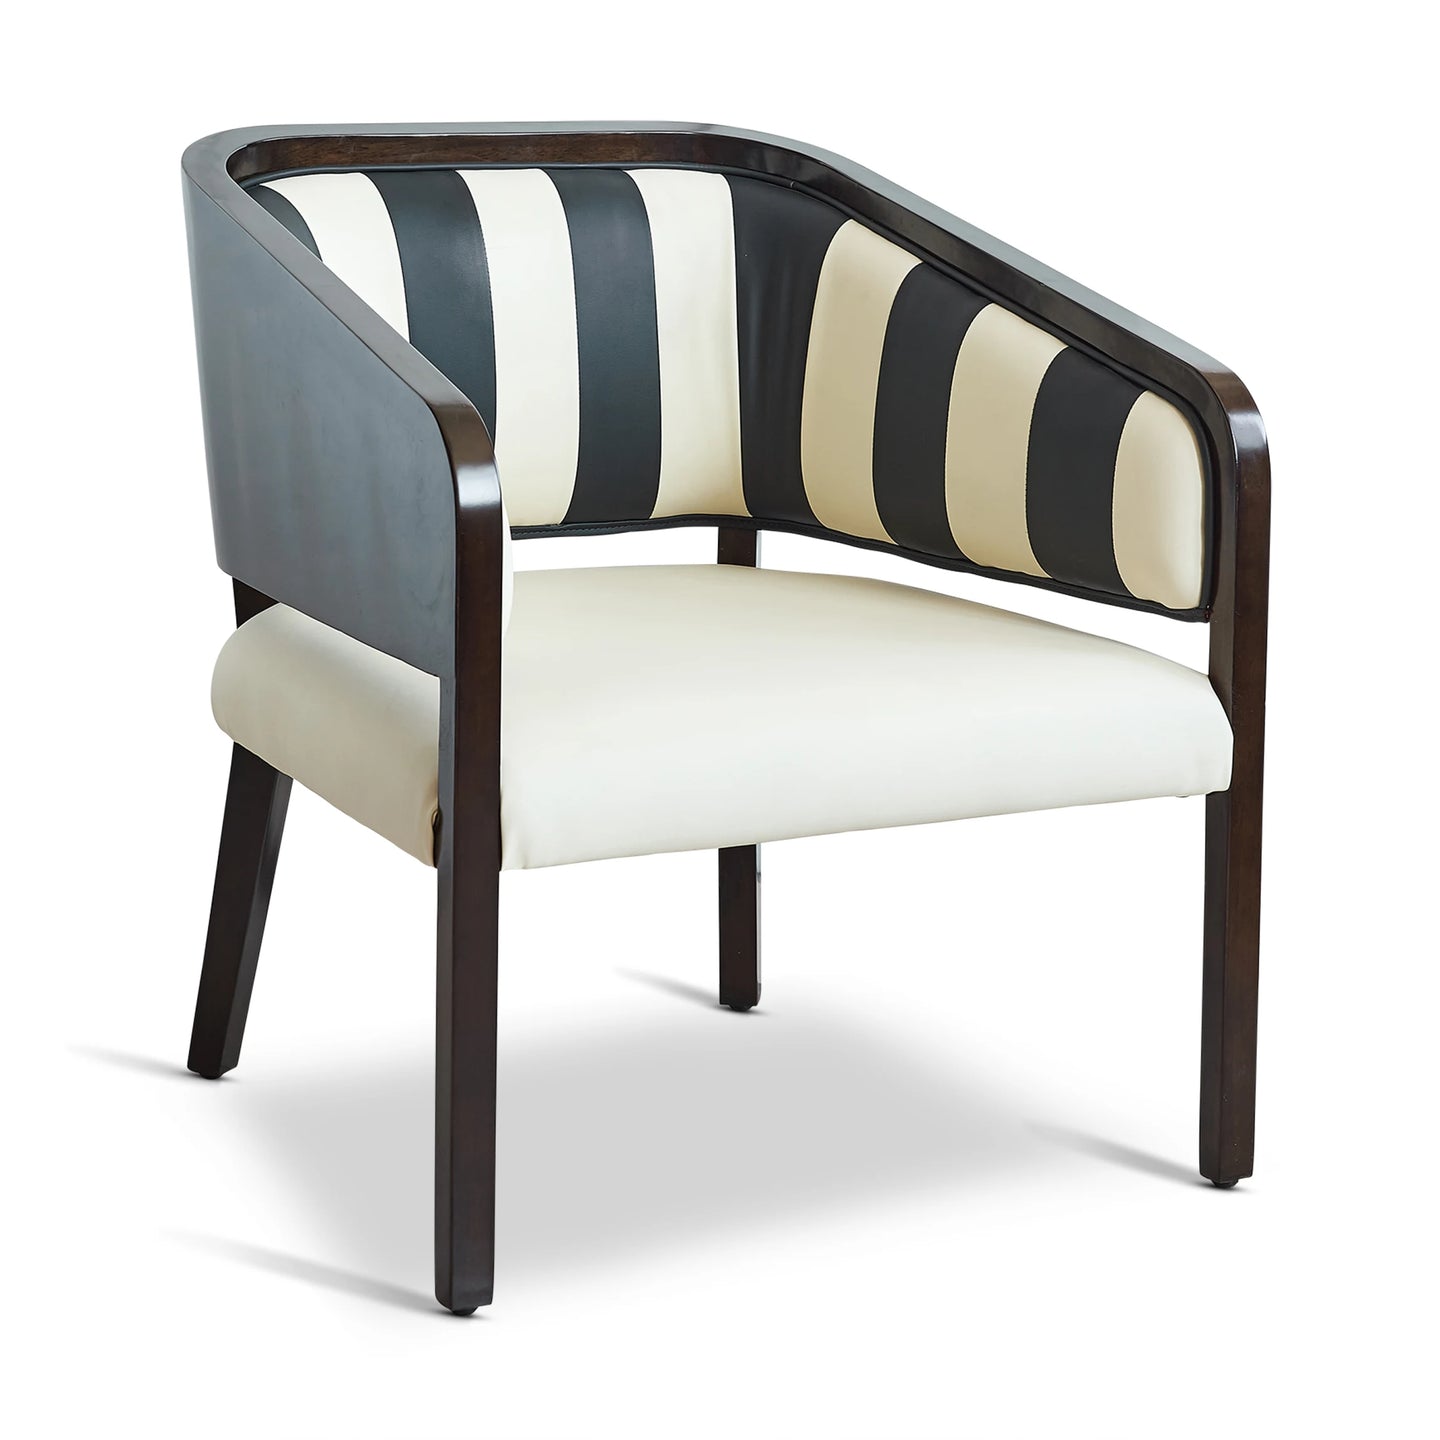 Authentic Models Martini Chair, Black & White - MF407